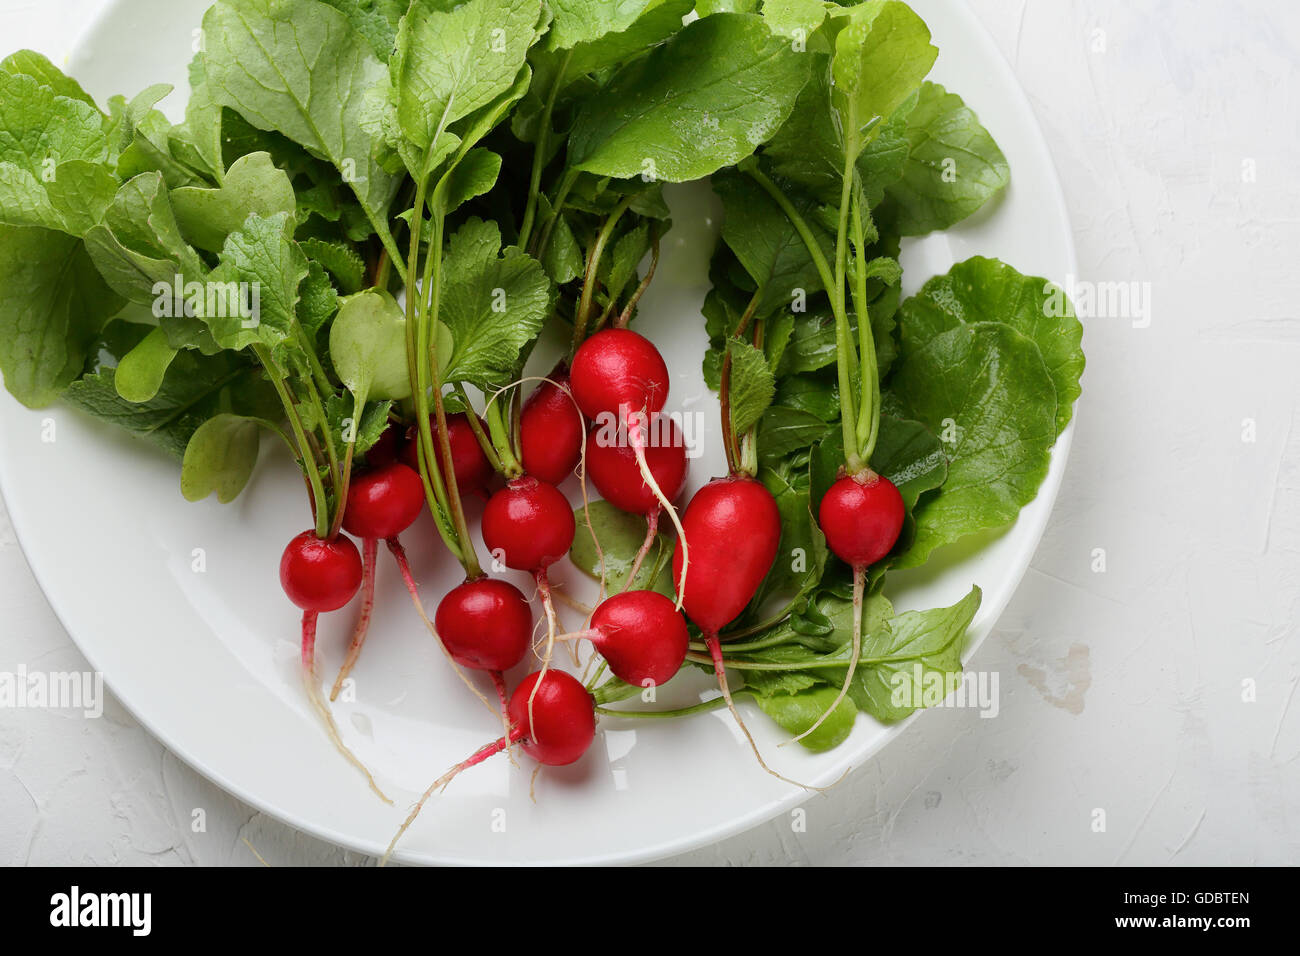 Rafano organico sulla piastra bianca, verdure fresche Foto Stock